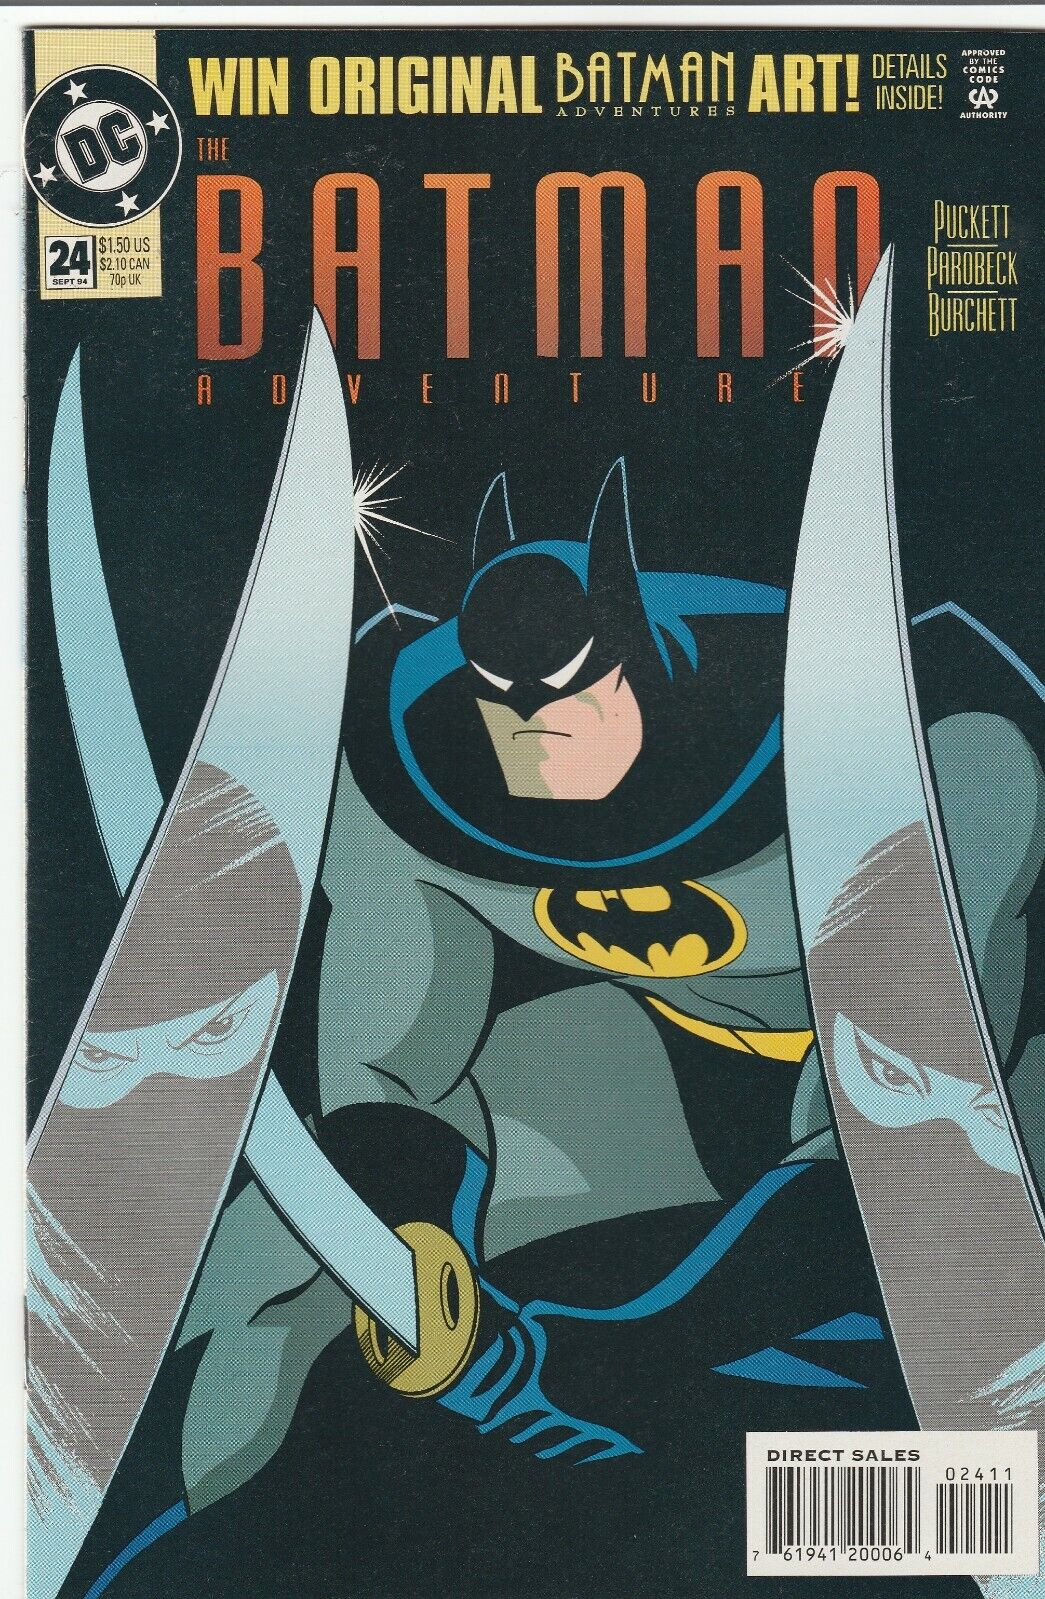 BATMAN ADVENTURES # 24  ANIMATED SERIES 2 1992 MIKE PAROBECK .99 AUCTION 12